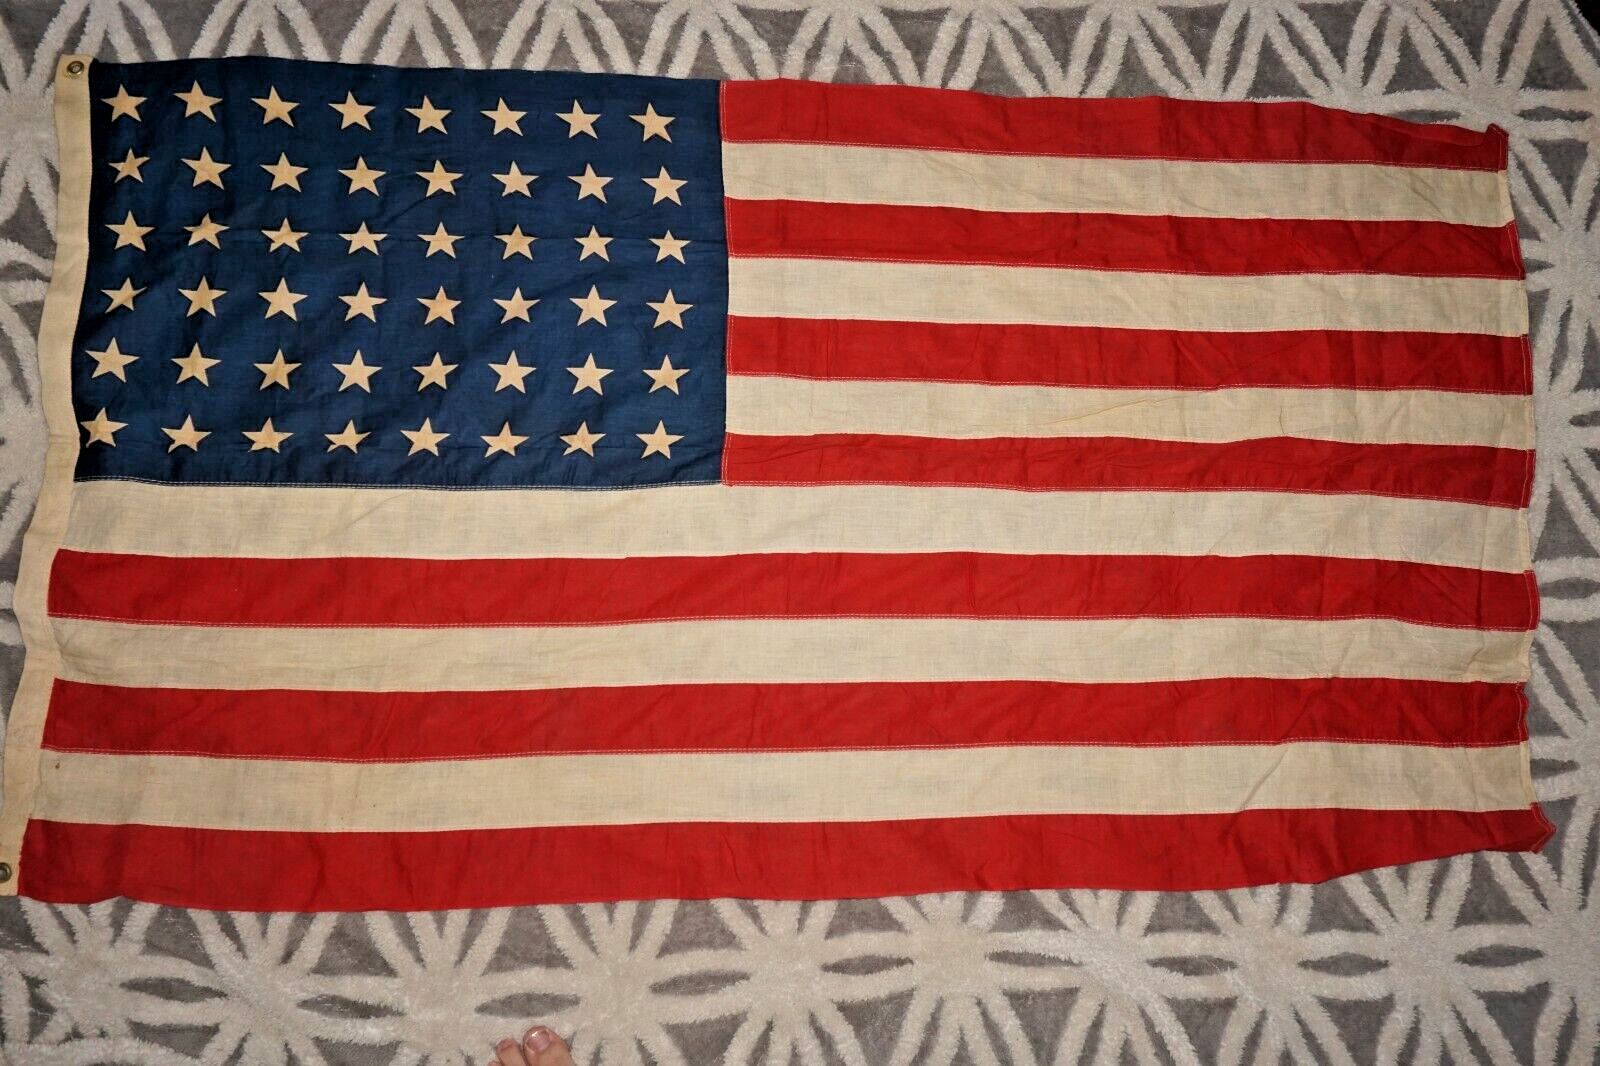 Vintage Original 48 star US American Flag  33